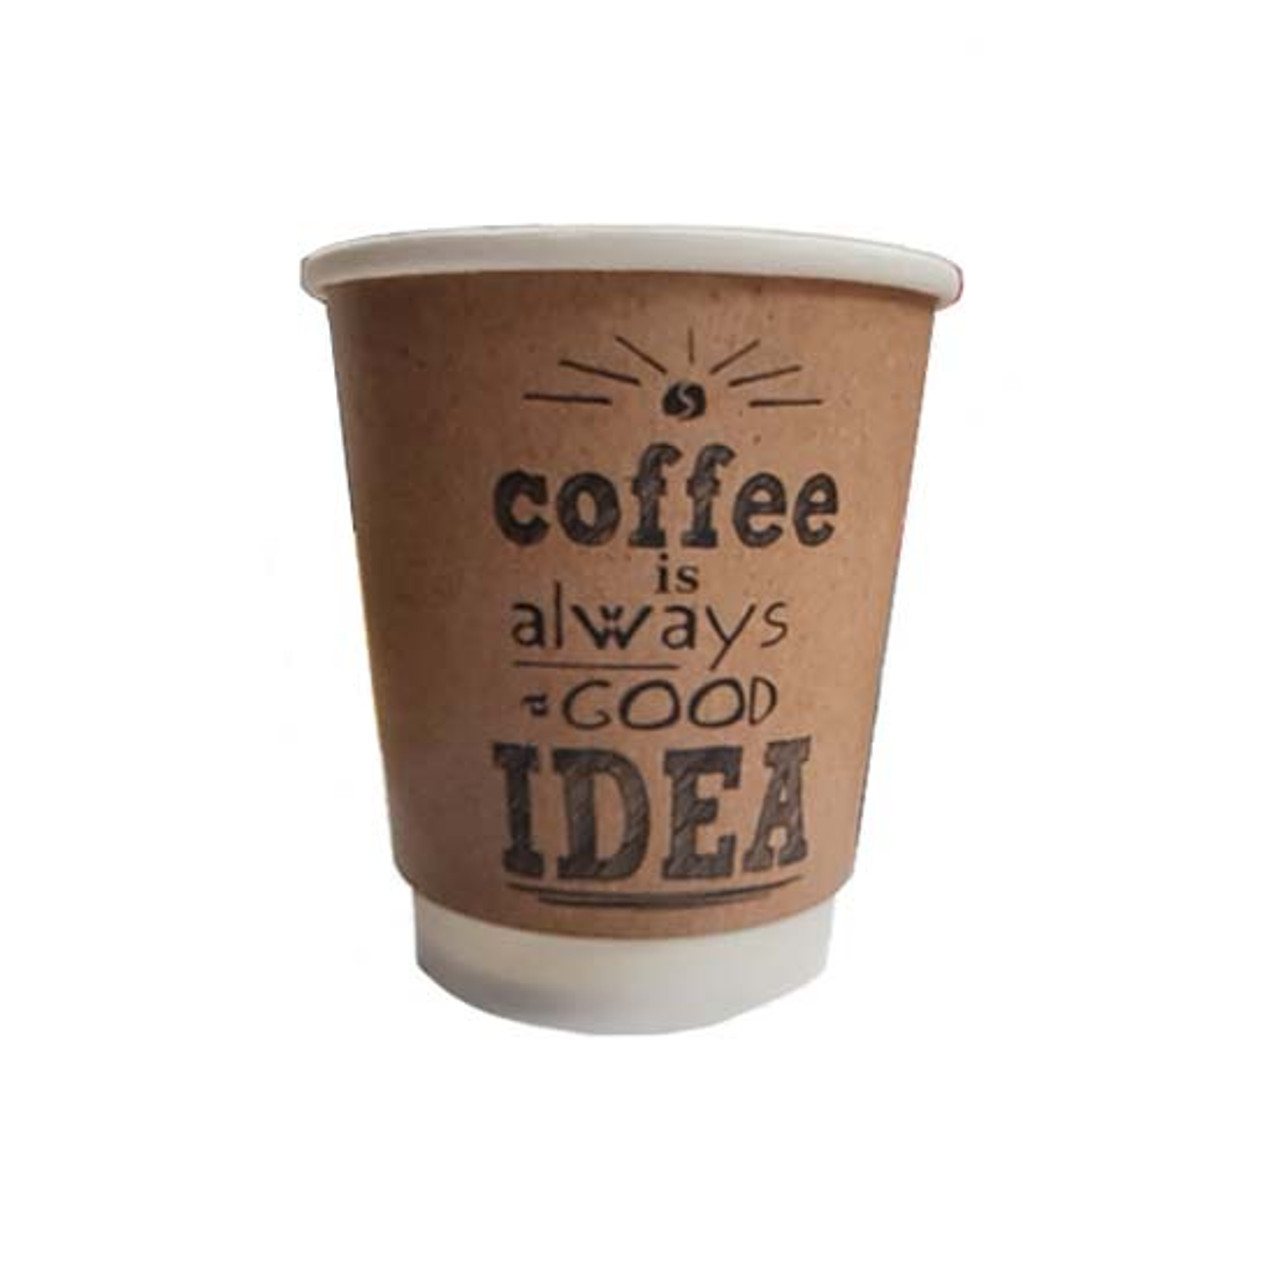 8oz Recyclable kraft twin wall cardboard cup 'Great Taste Less Waste' design